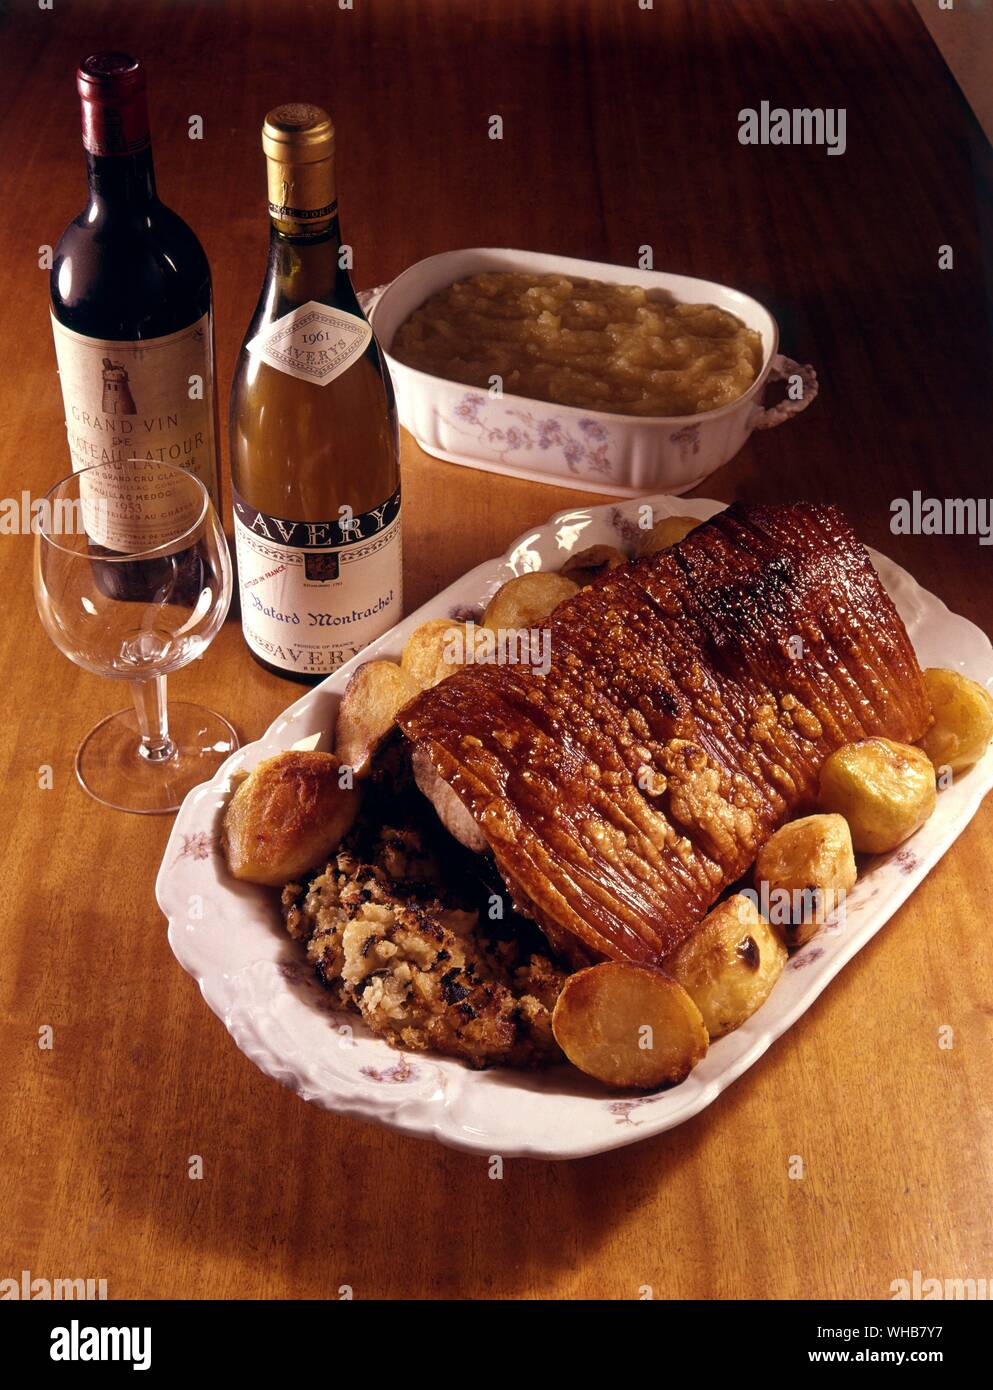 Roast pork with apple sauce. Stock Photo